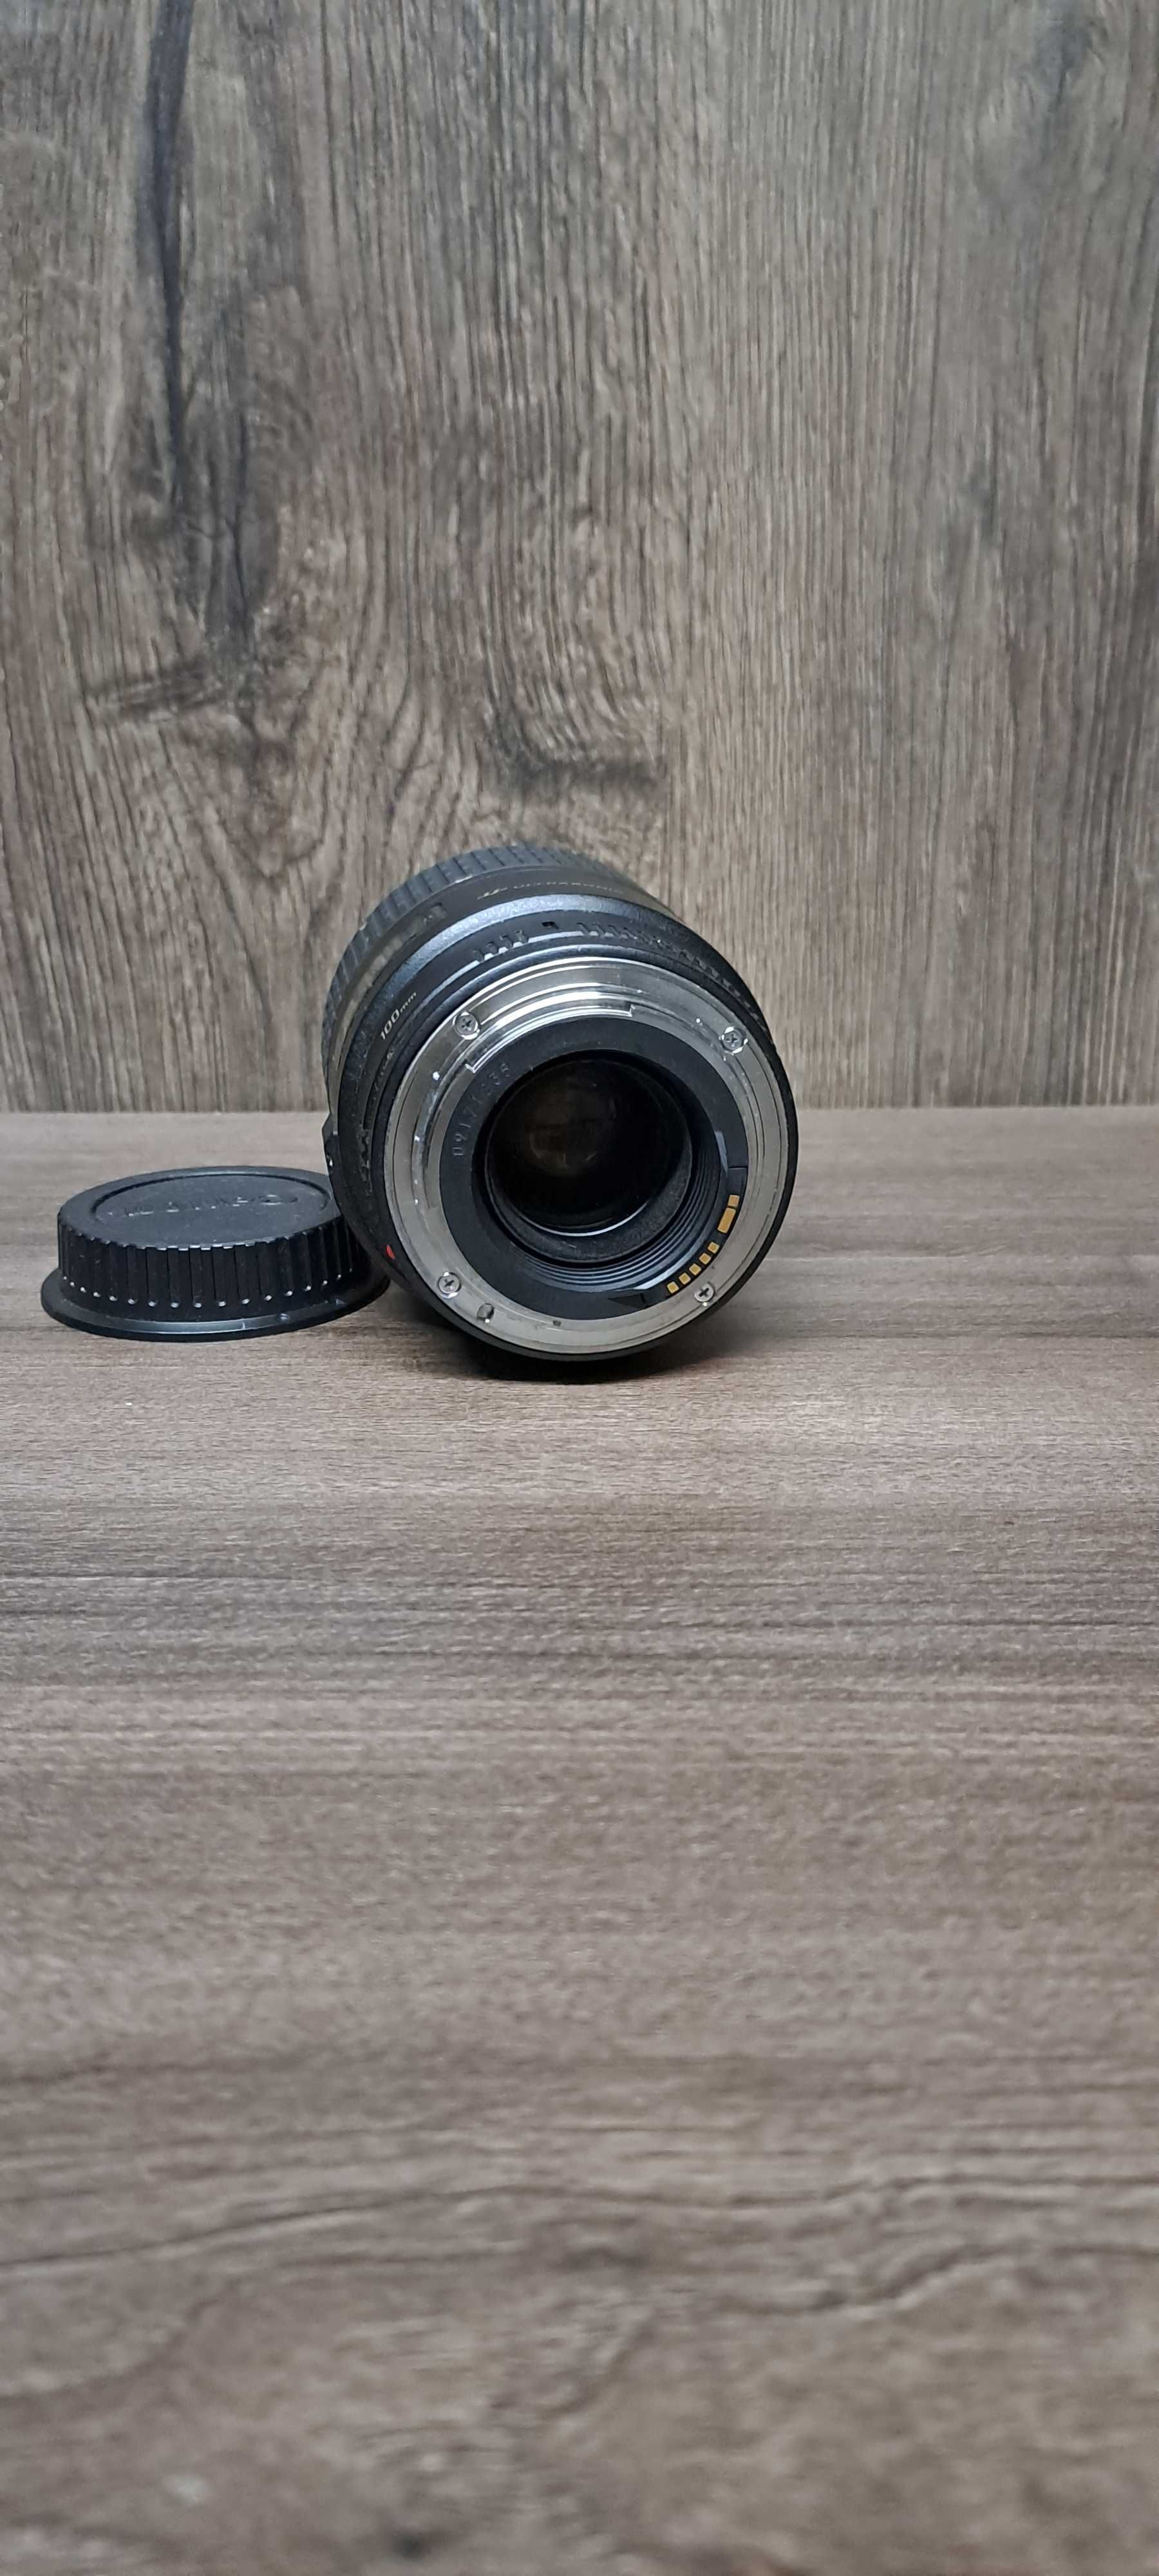 Canon Macro Lens EF 100mm 1:2.8